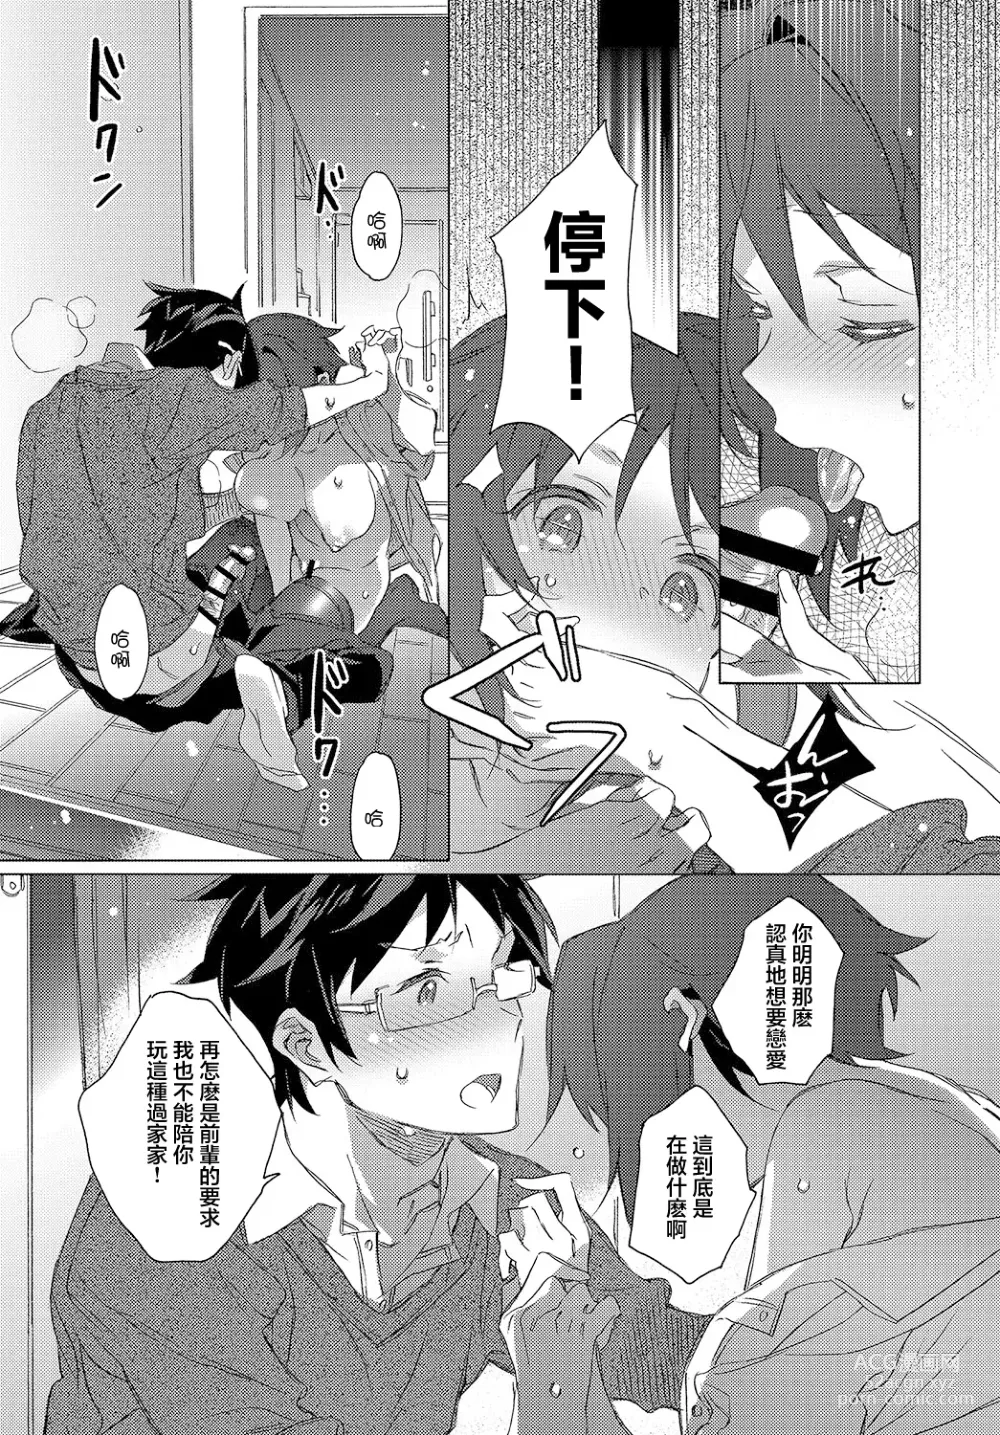 Page 7 of manga 真心莫比烏斯環